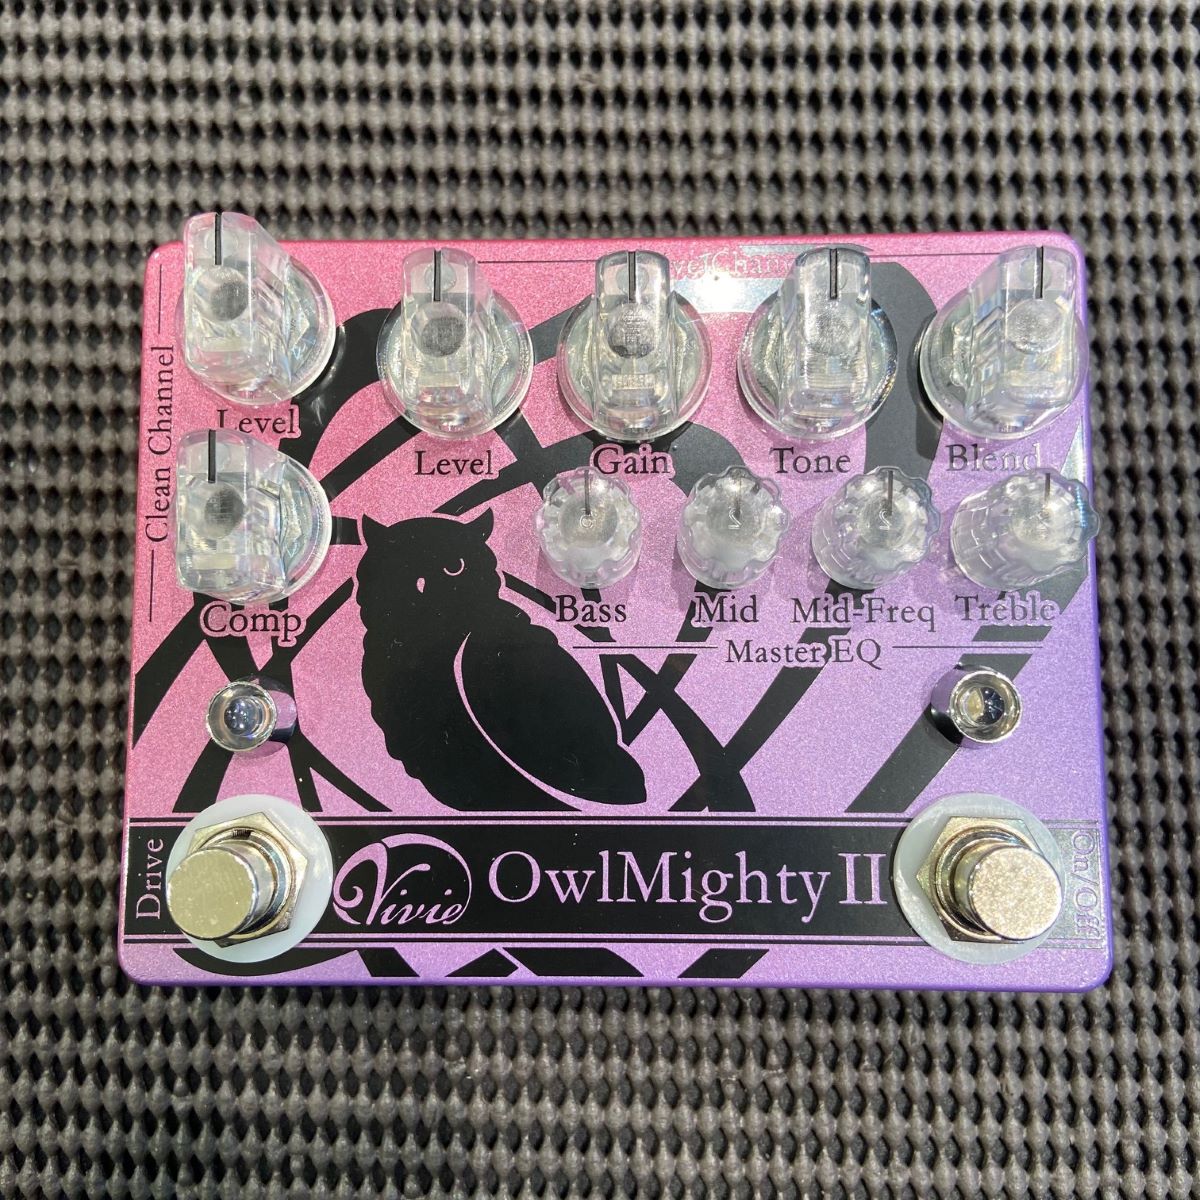 OwlMighty Ⅱ / Vivie ベース用プリアンプ